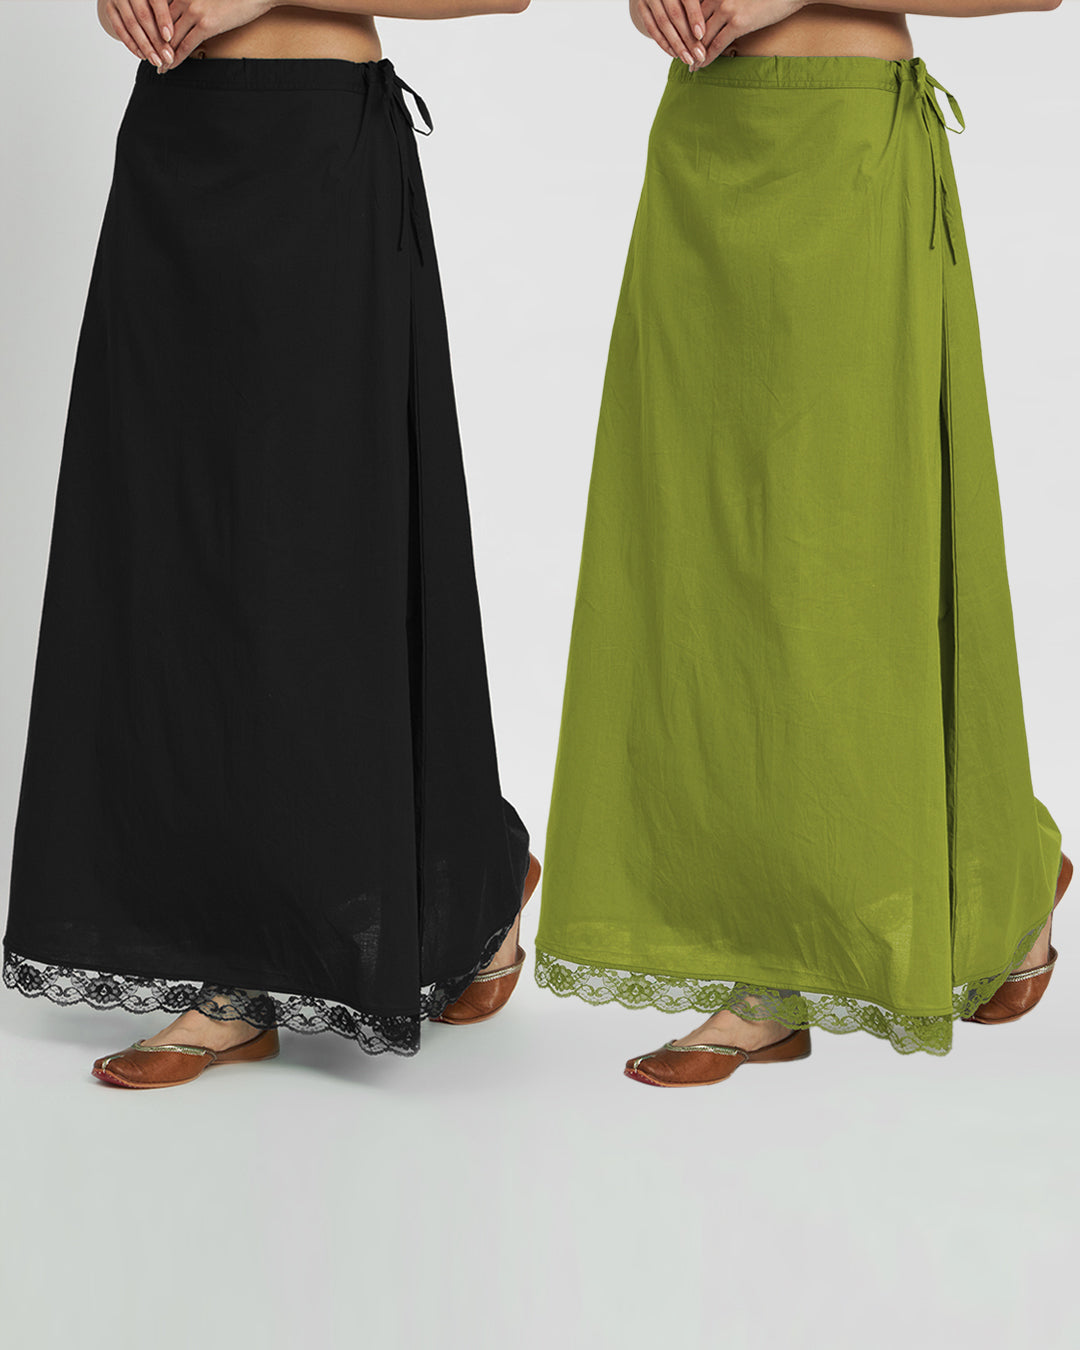 Combo: Black & Sage Green Lace Medley Peekaboo Petticoat- Set of 2